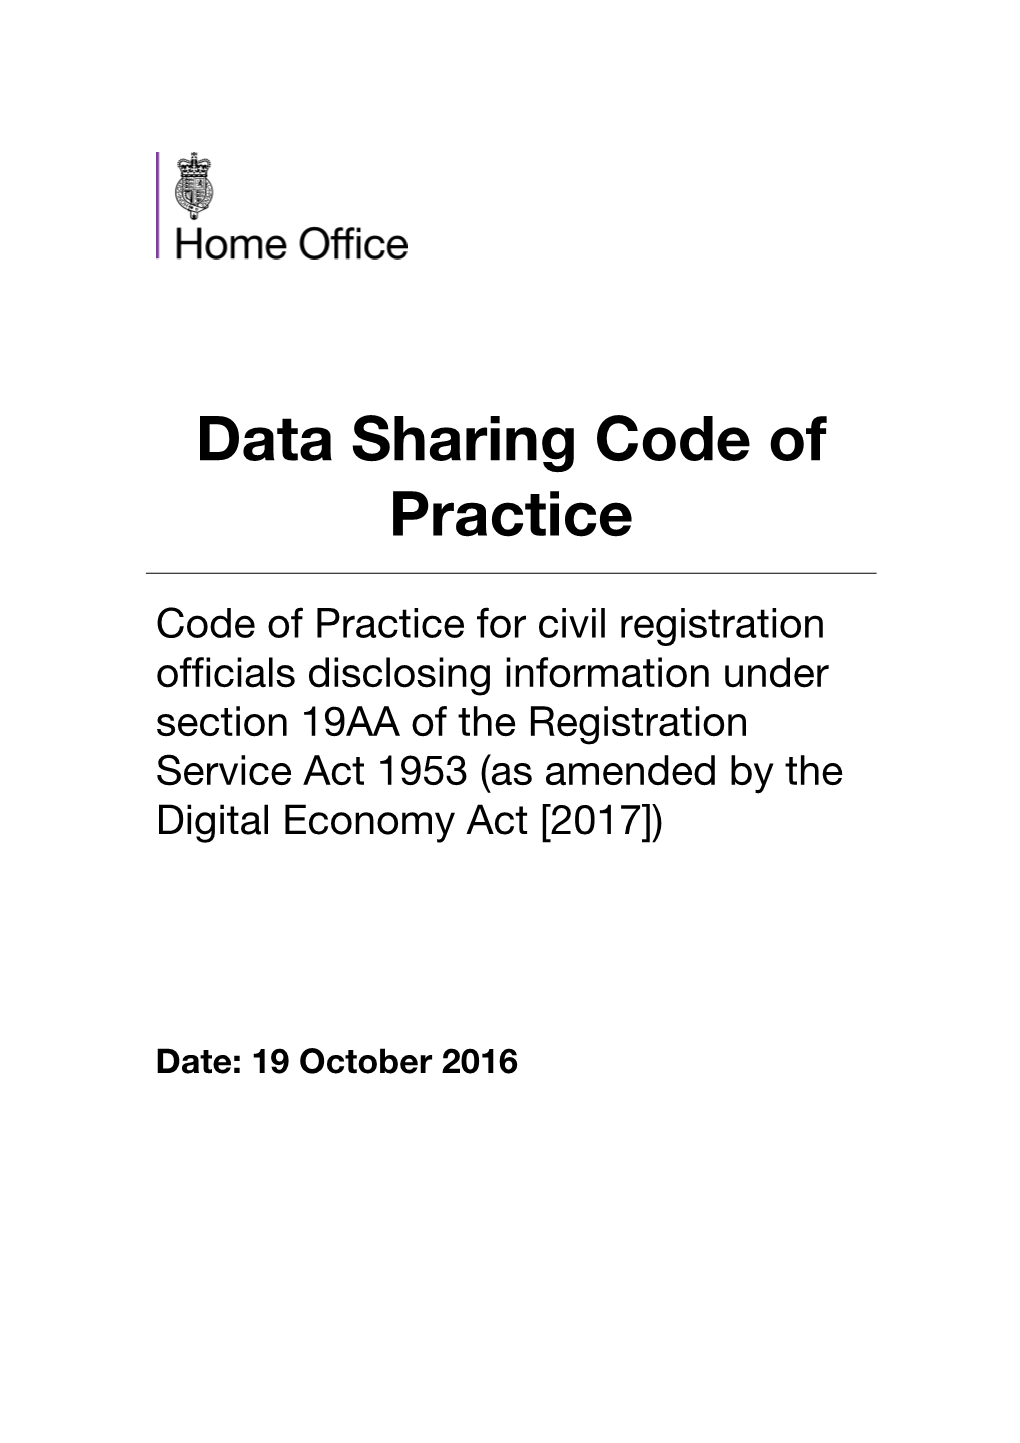 Data Sharing Code of Practice